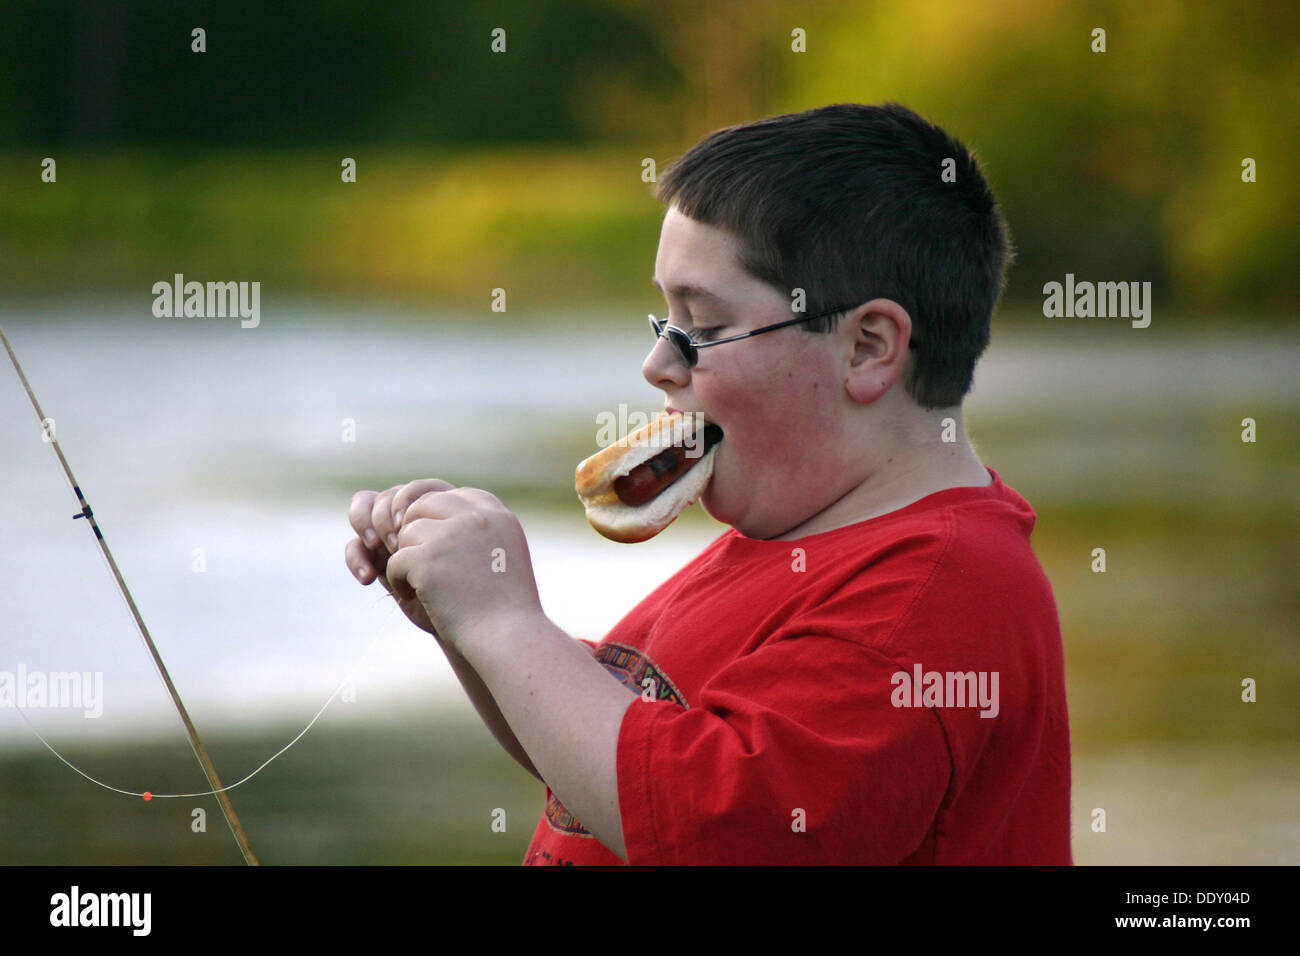 11 year old boy, eating hotdog while baiting hook for fishing ...